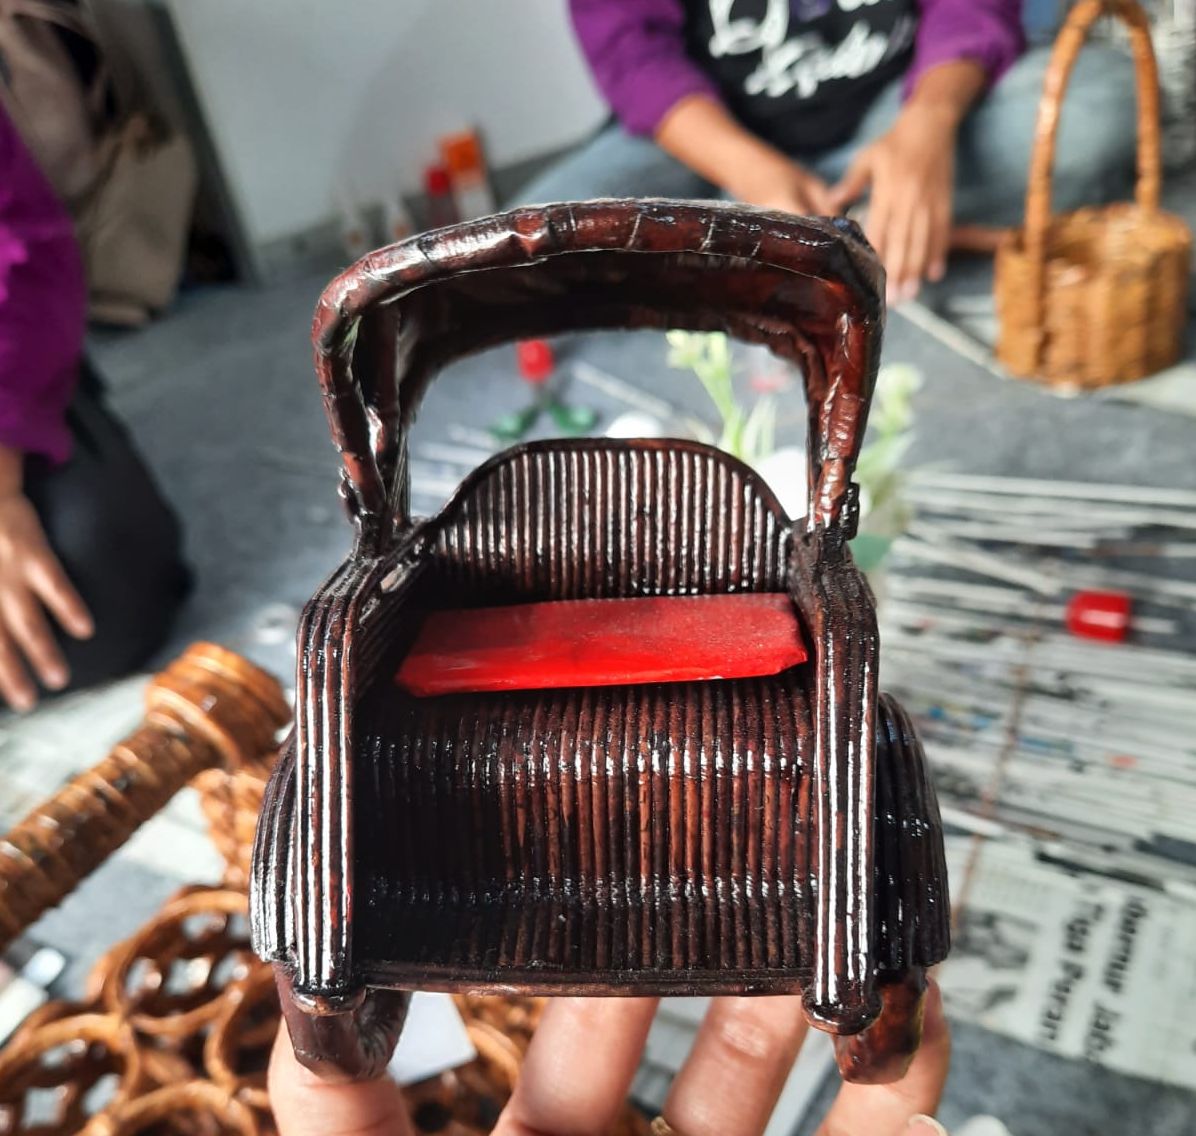 Miniatur becak dari hasil olahan limbah kertas di Kampung Kertas Ciamis